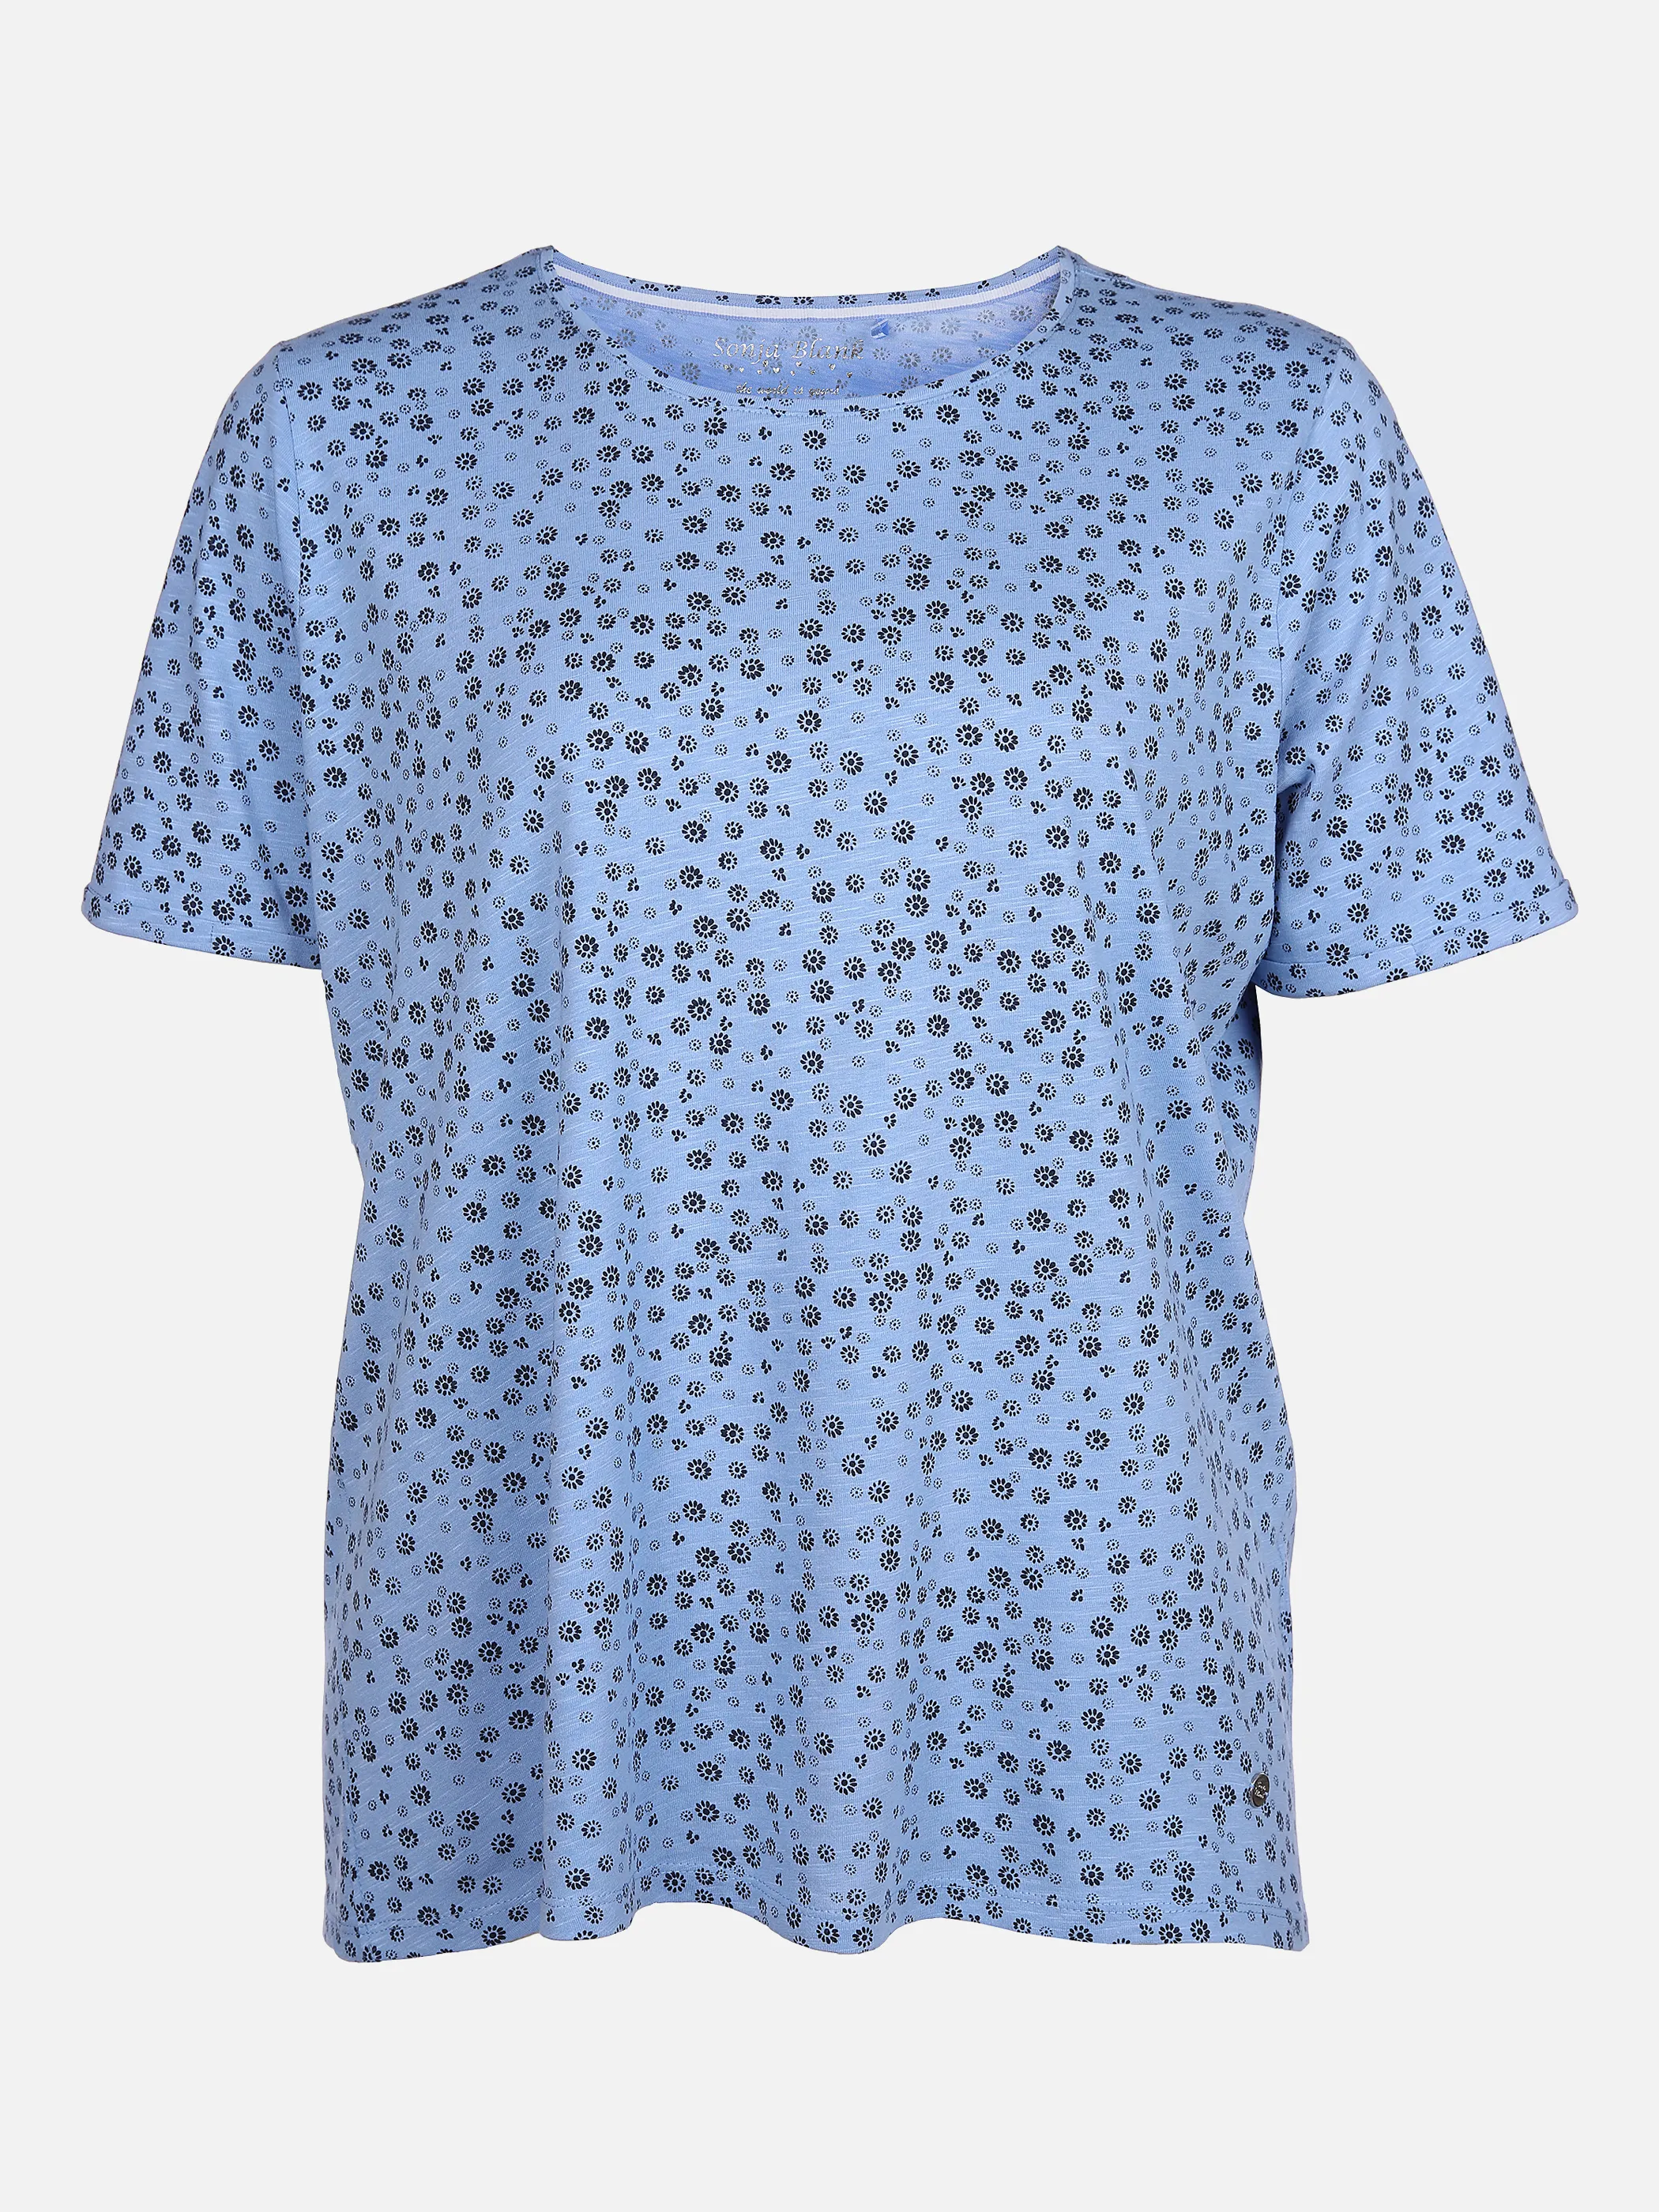 Sonja Blank Da-Gr.Größen Shirt m. Print Blau 862269 SUMMER SEA 1